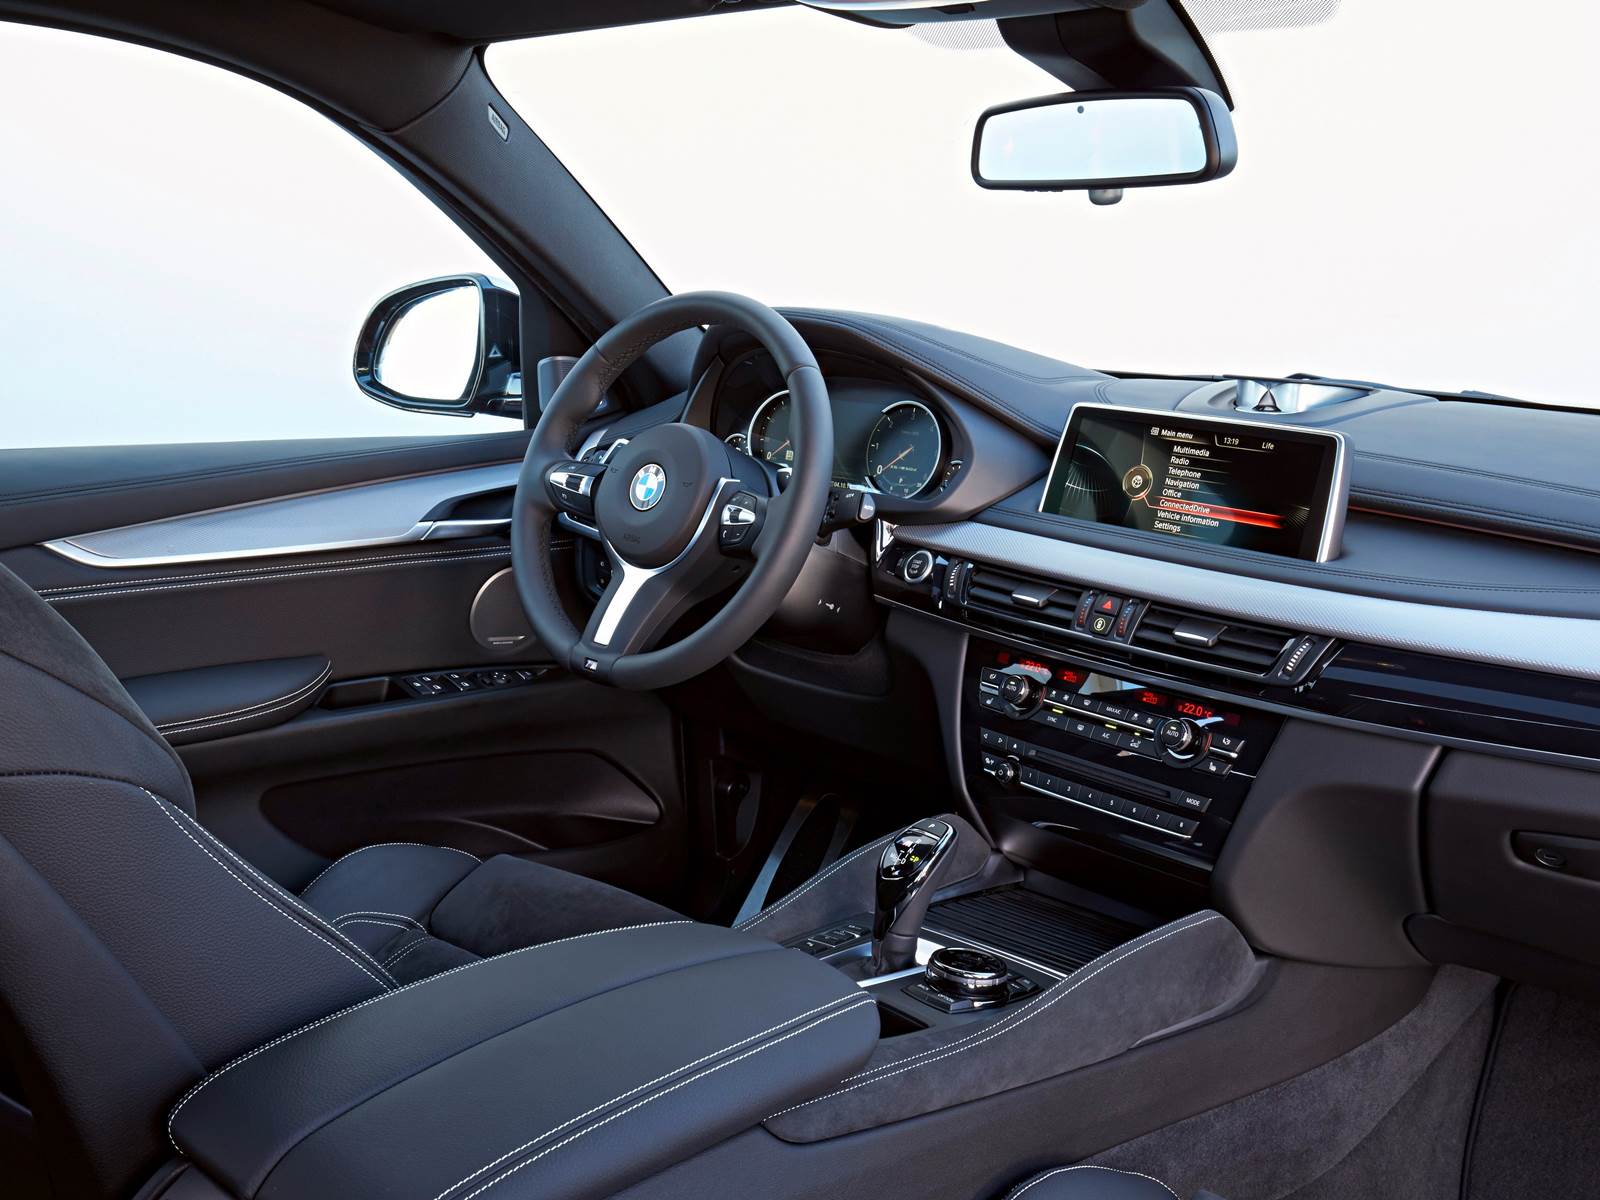 BMW X6 2015 - Brasil - interior